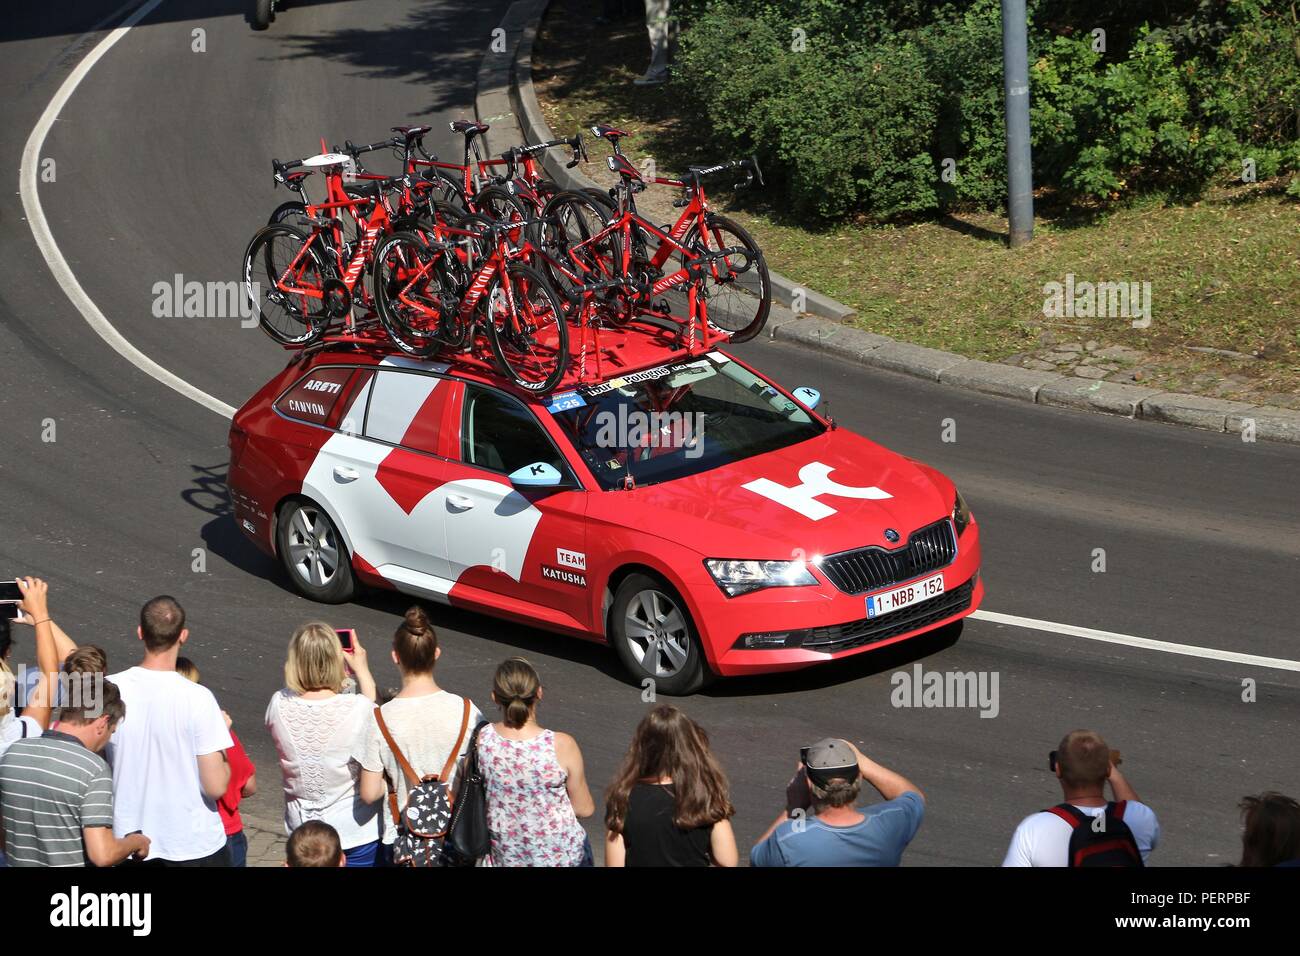 BYTOM AFFITTO, Polonia - 13 luglio 2016: Team veicolo trascina in Tour de Pologne gara ciclistica in Polonia. Skoda Superb del Team Katusha. Foto Stock